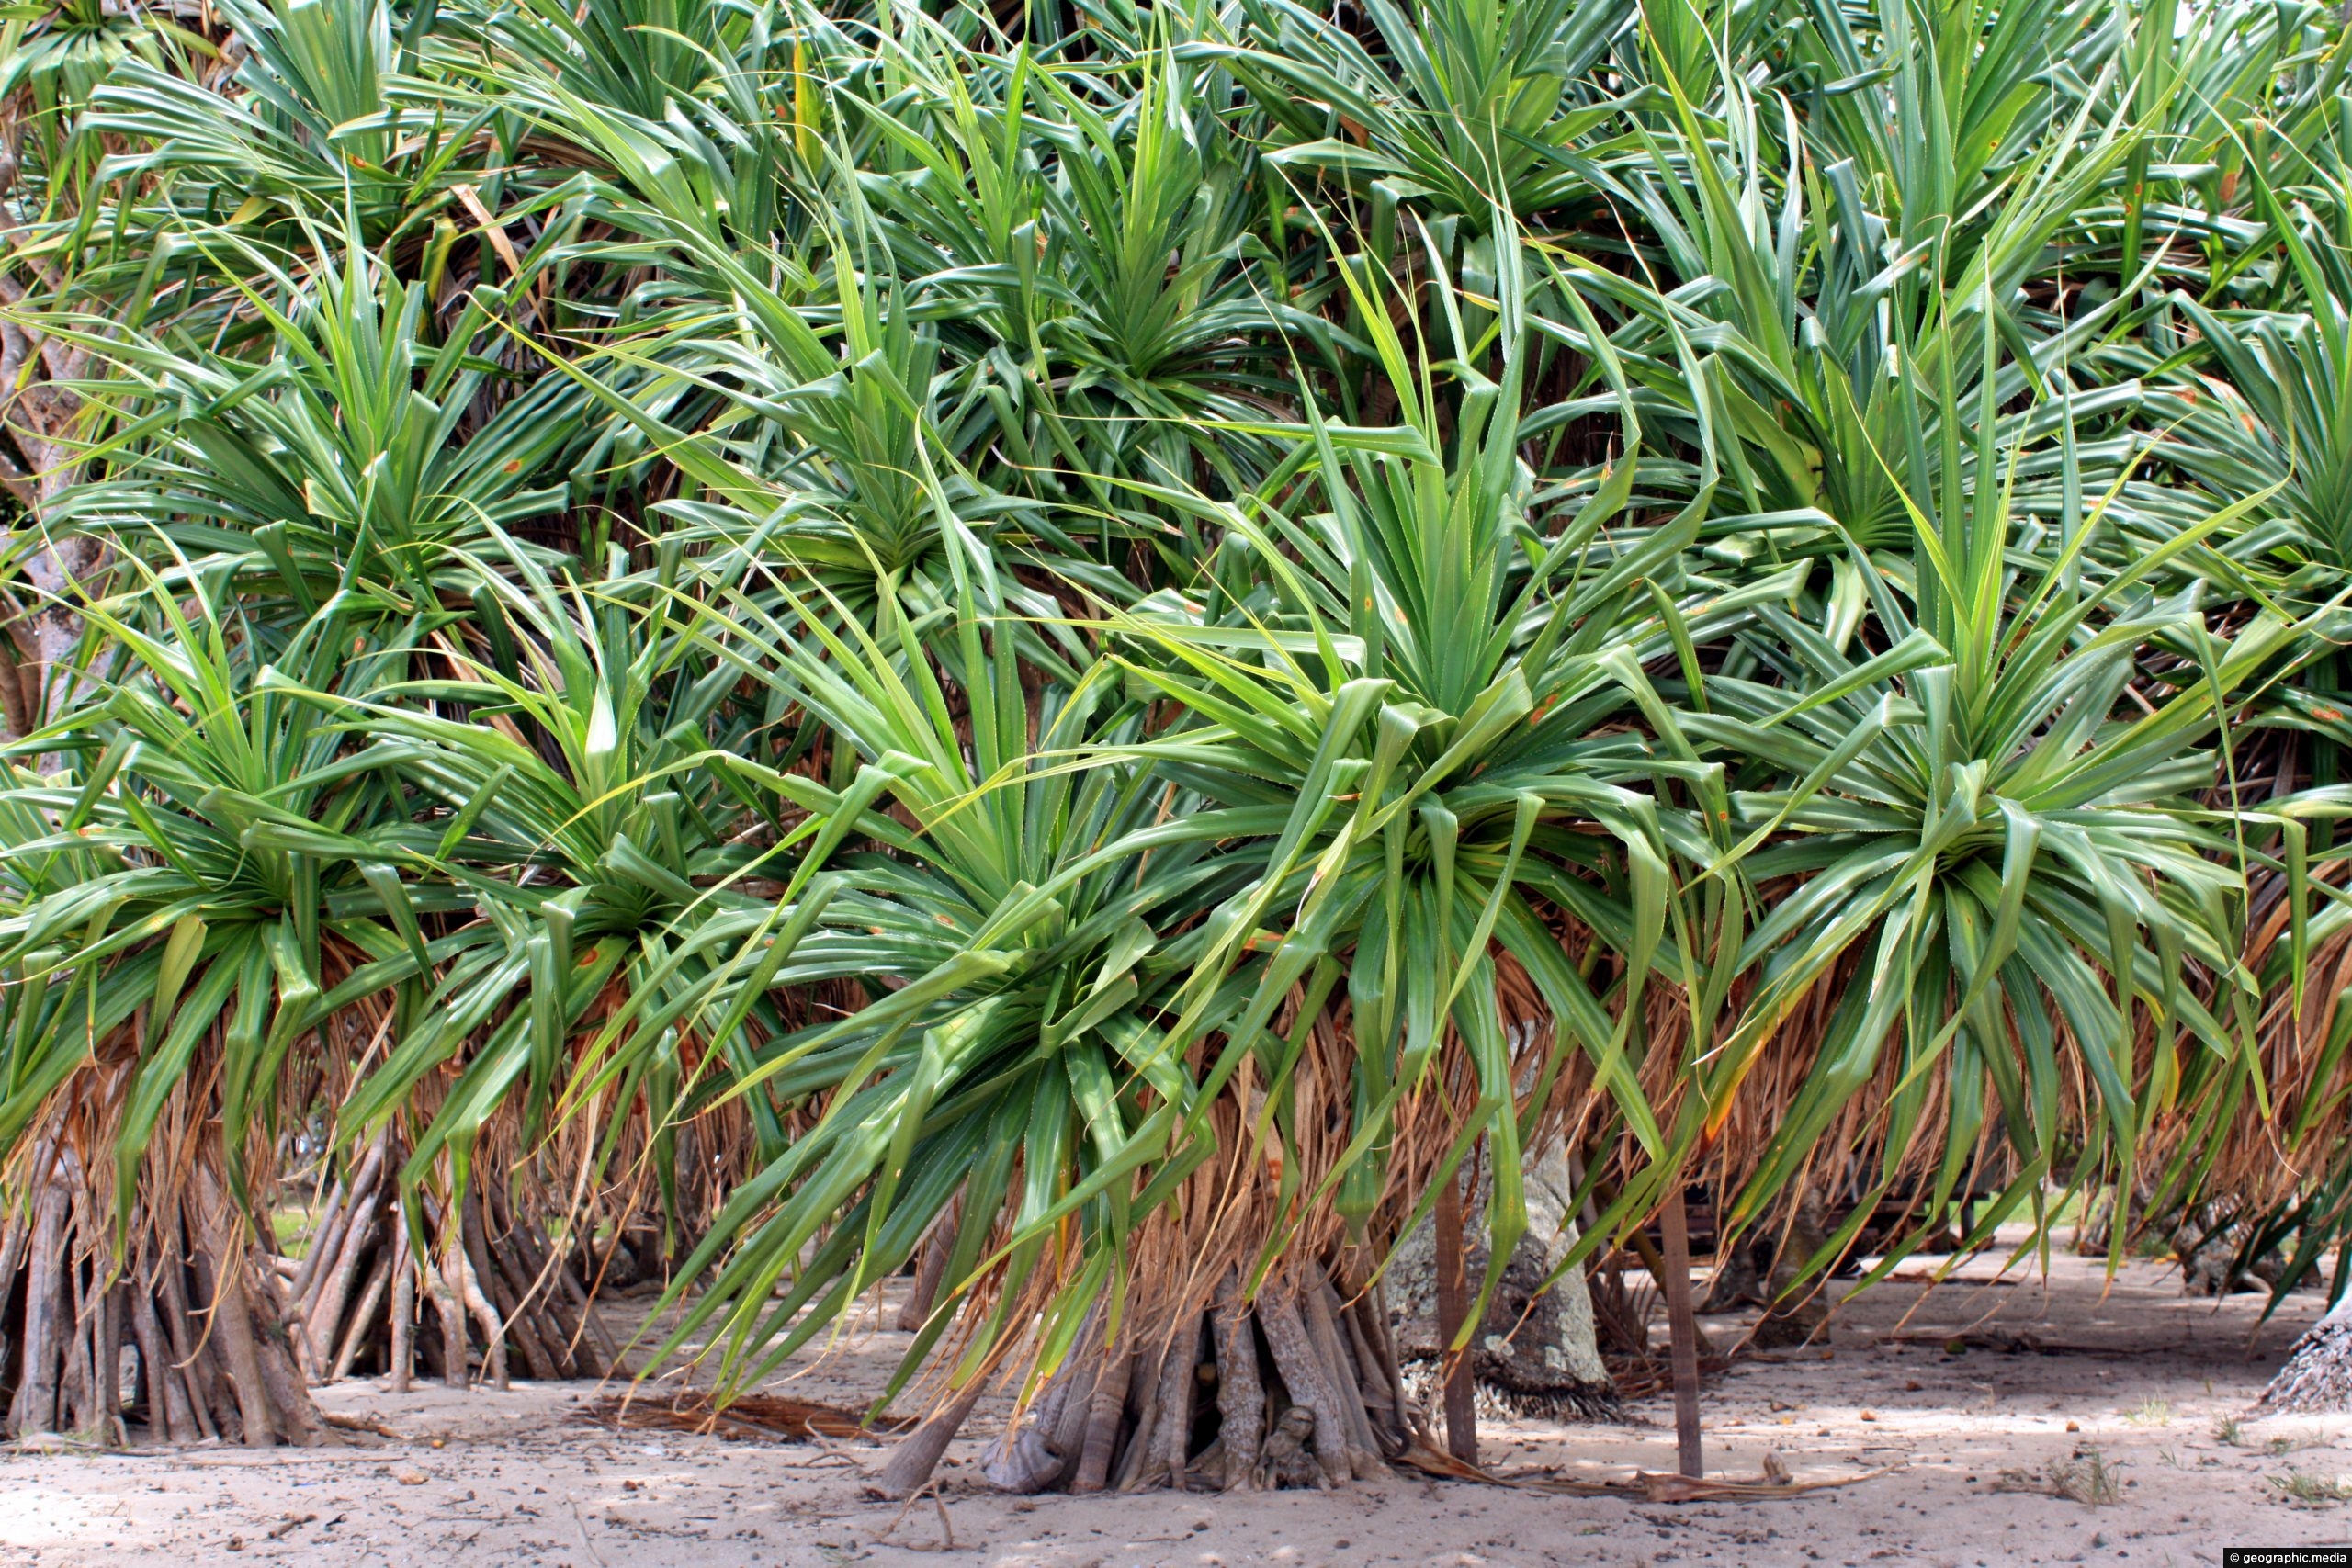 Pandanus Palm Forest on Atata Island